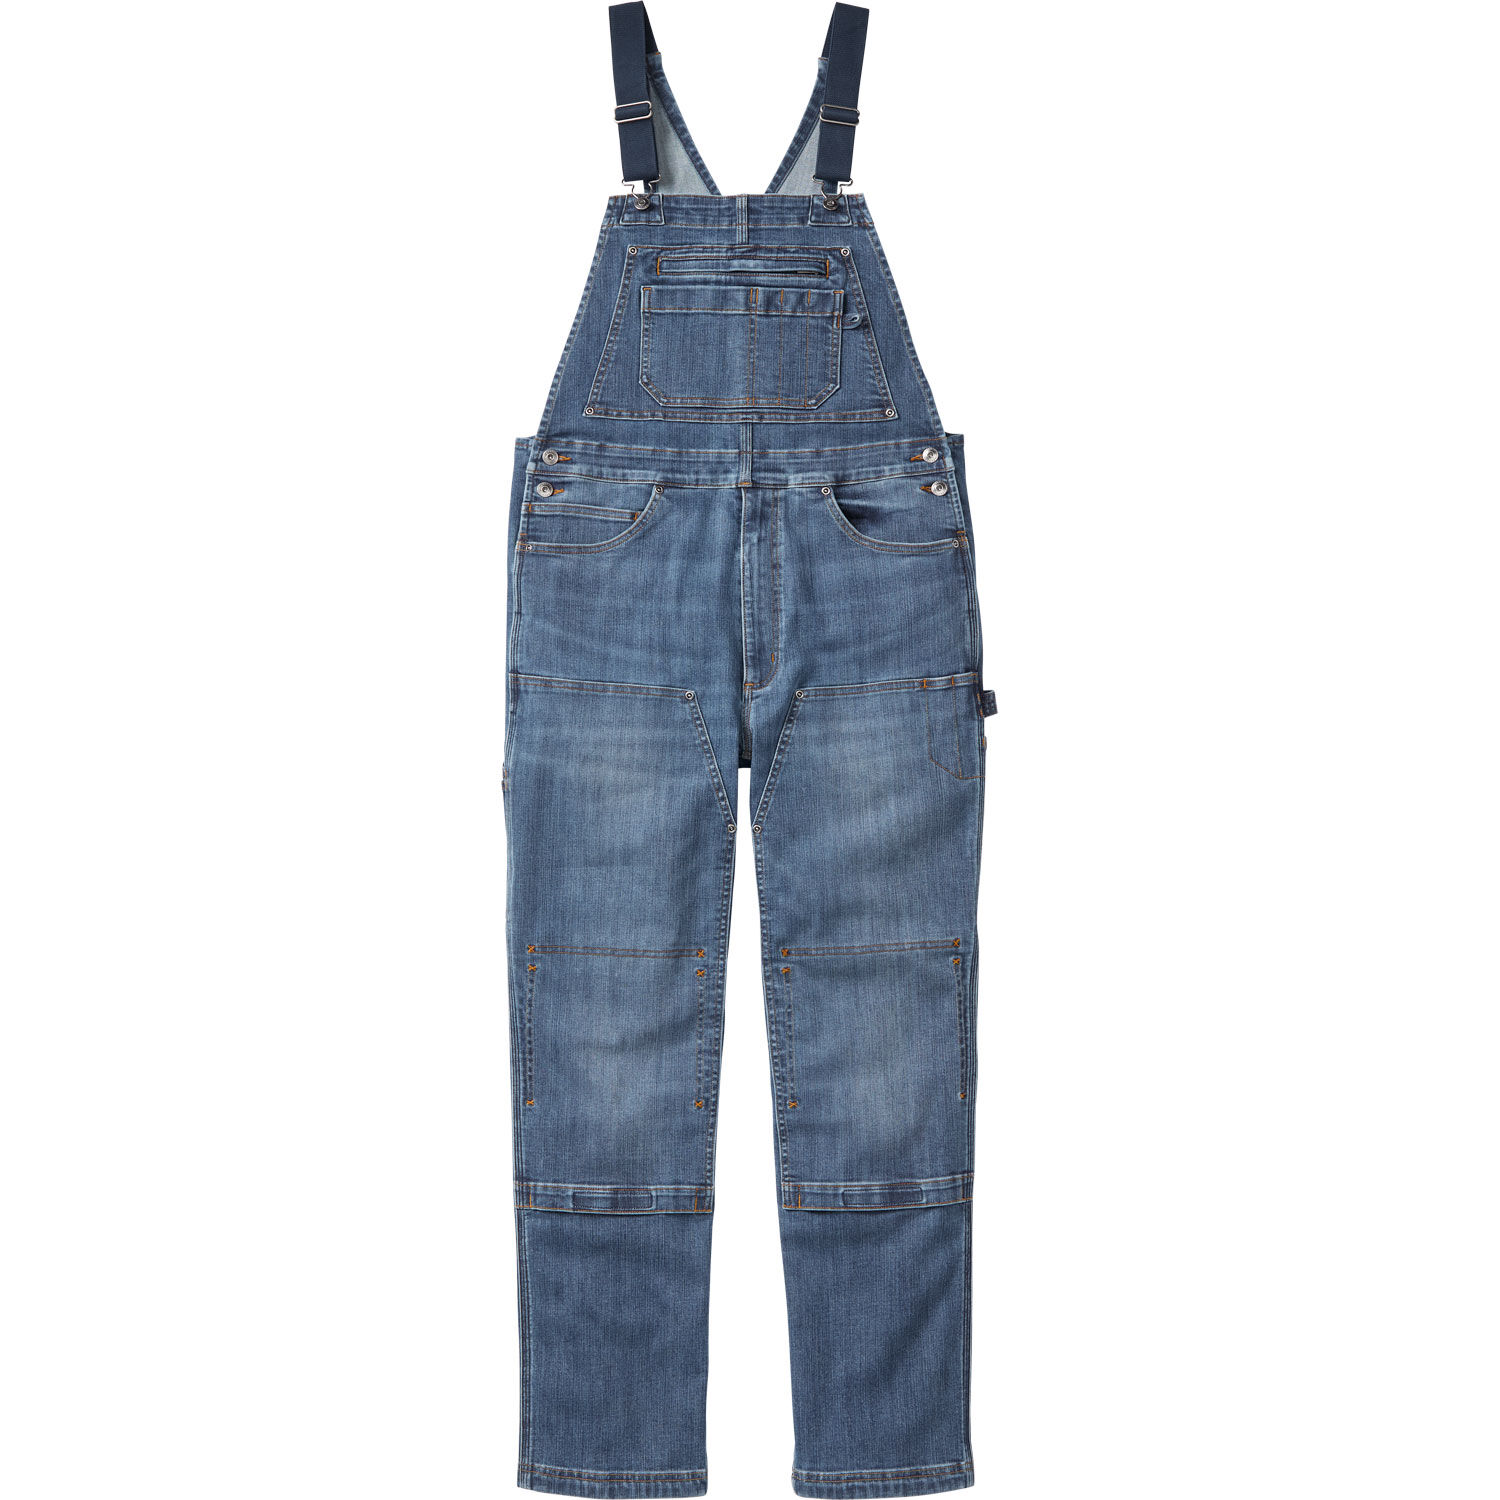 Mens Designer Ripped Jeans Mens Denim Jumpsuit With Distressed Denim Bib  And Suspender Pants Asian Size From Clothingsupreme, $25.44 | DHgate.Com